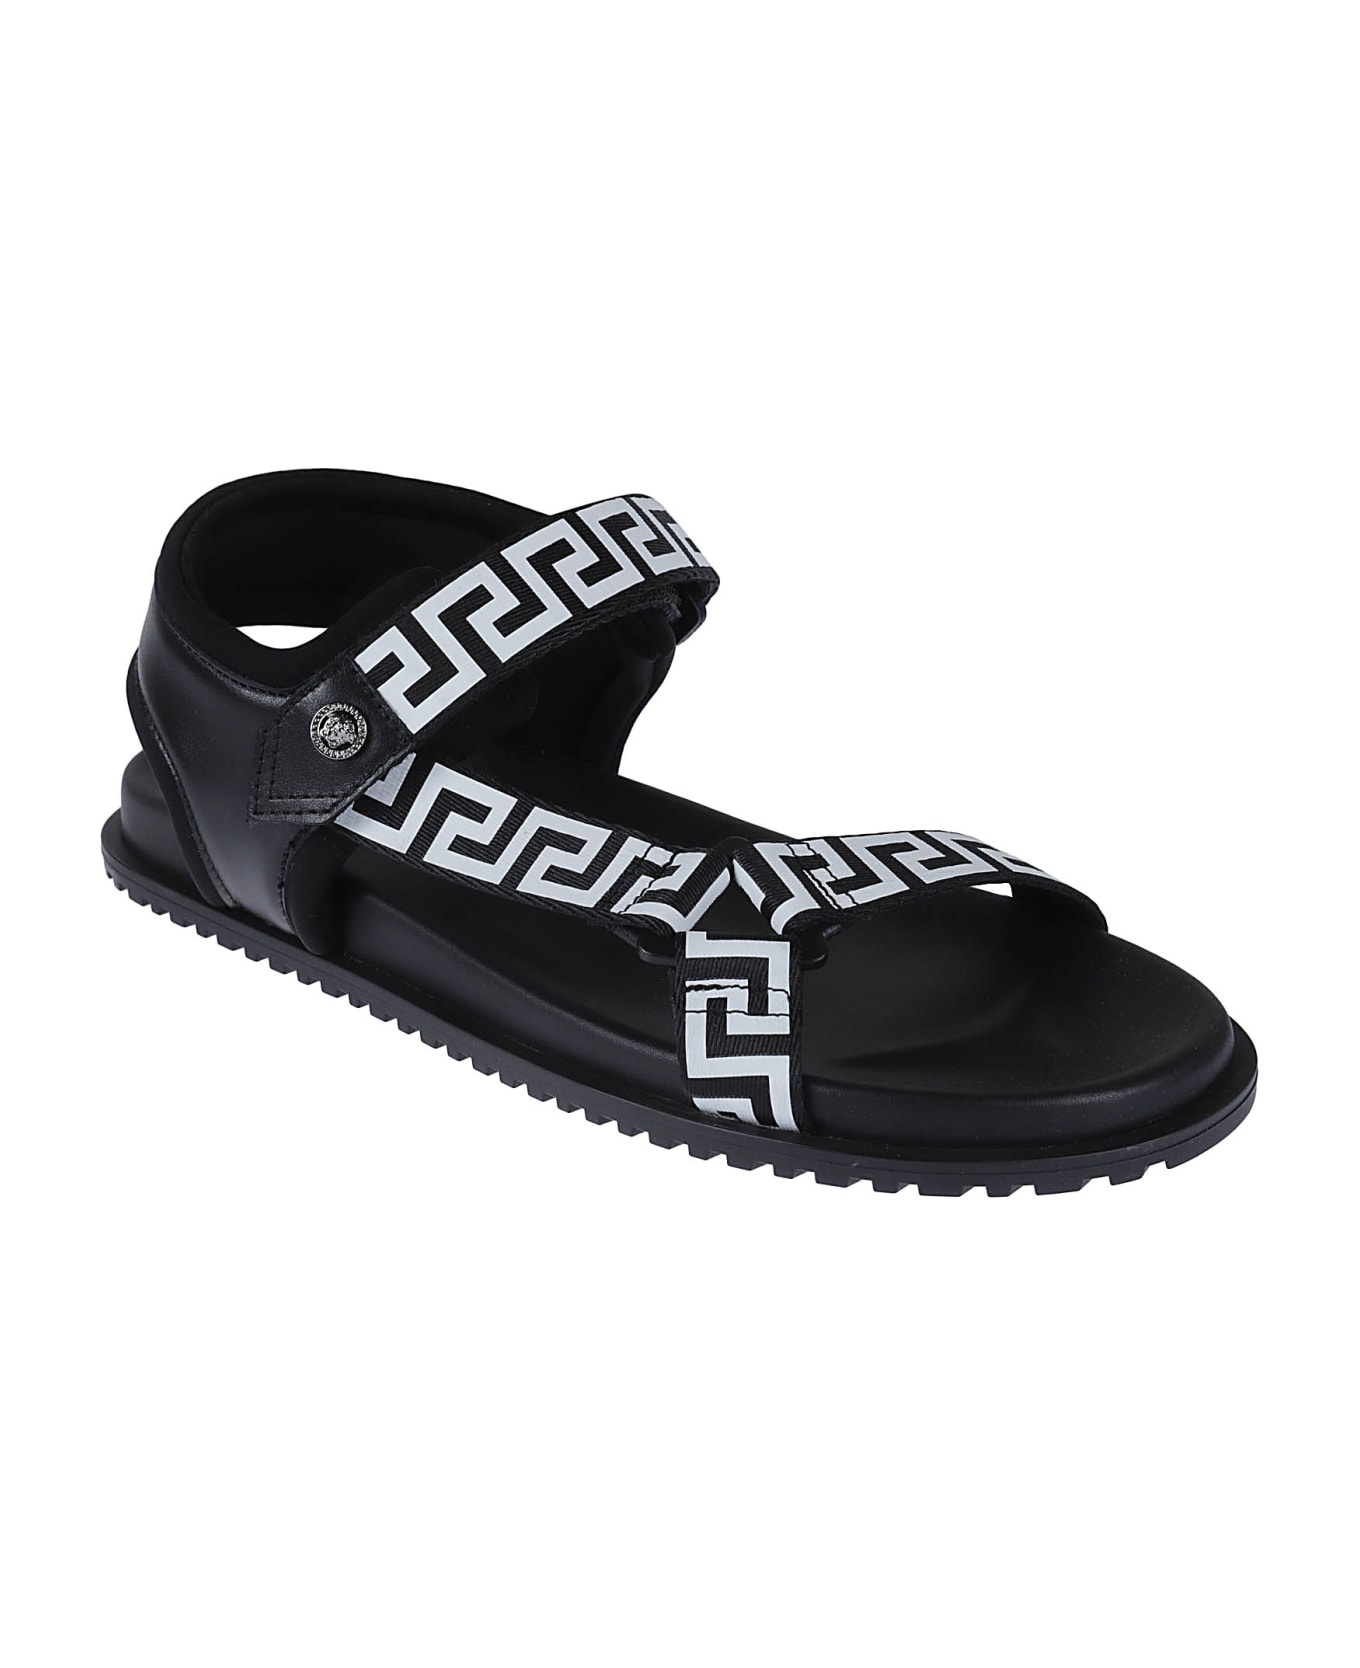 Versace Ankle Strap Sandals - Black/White